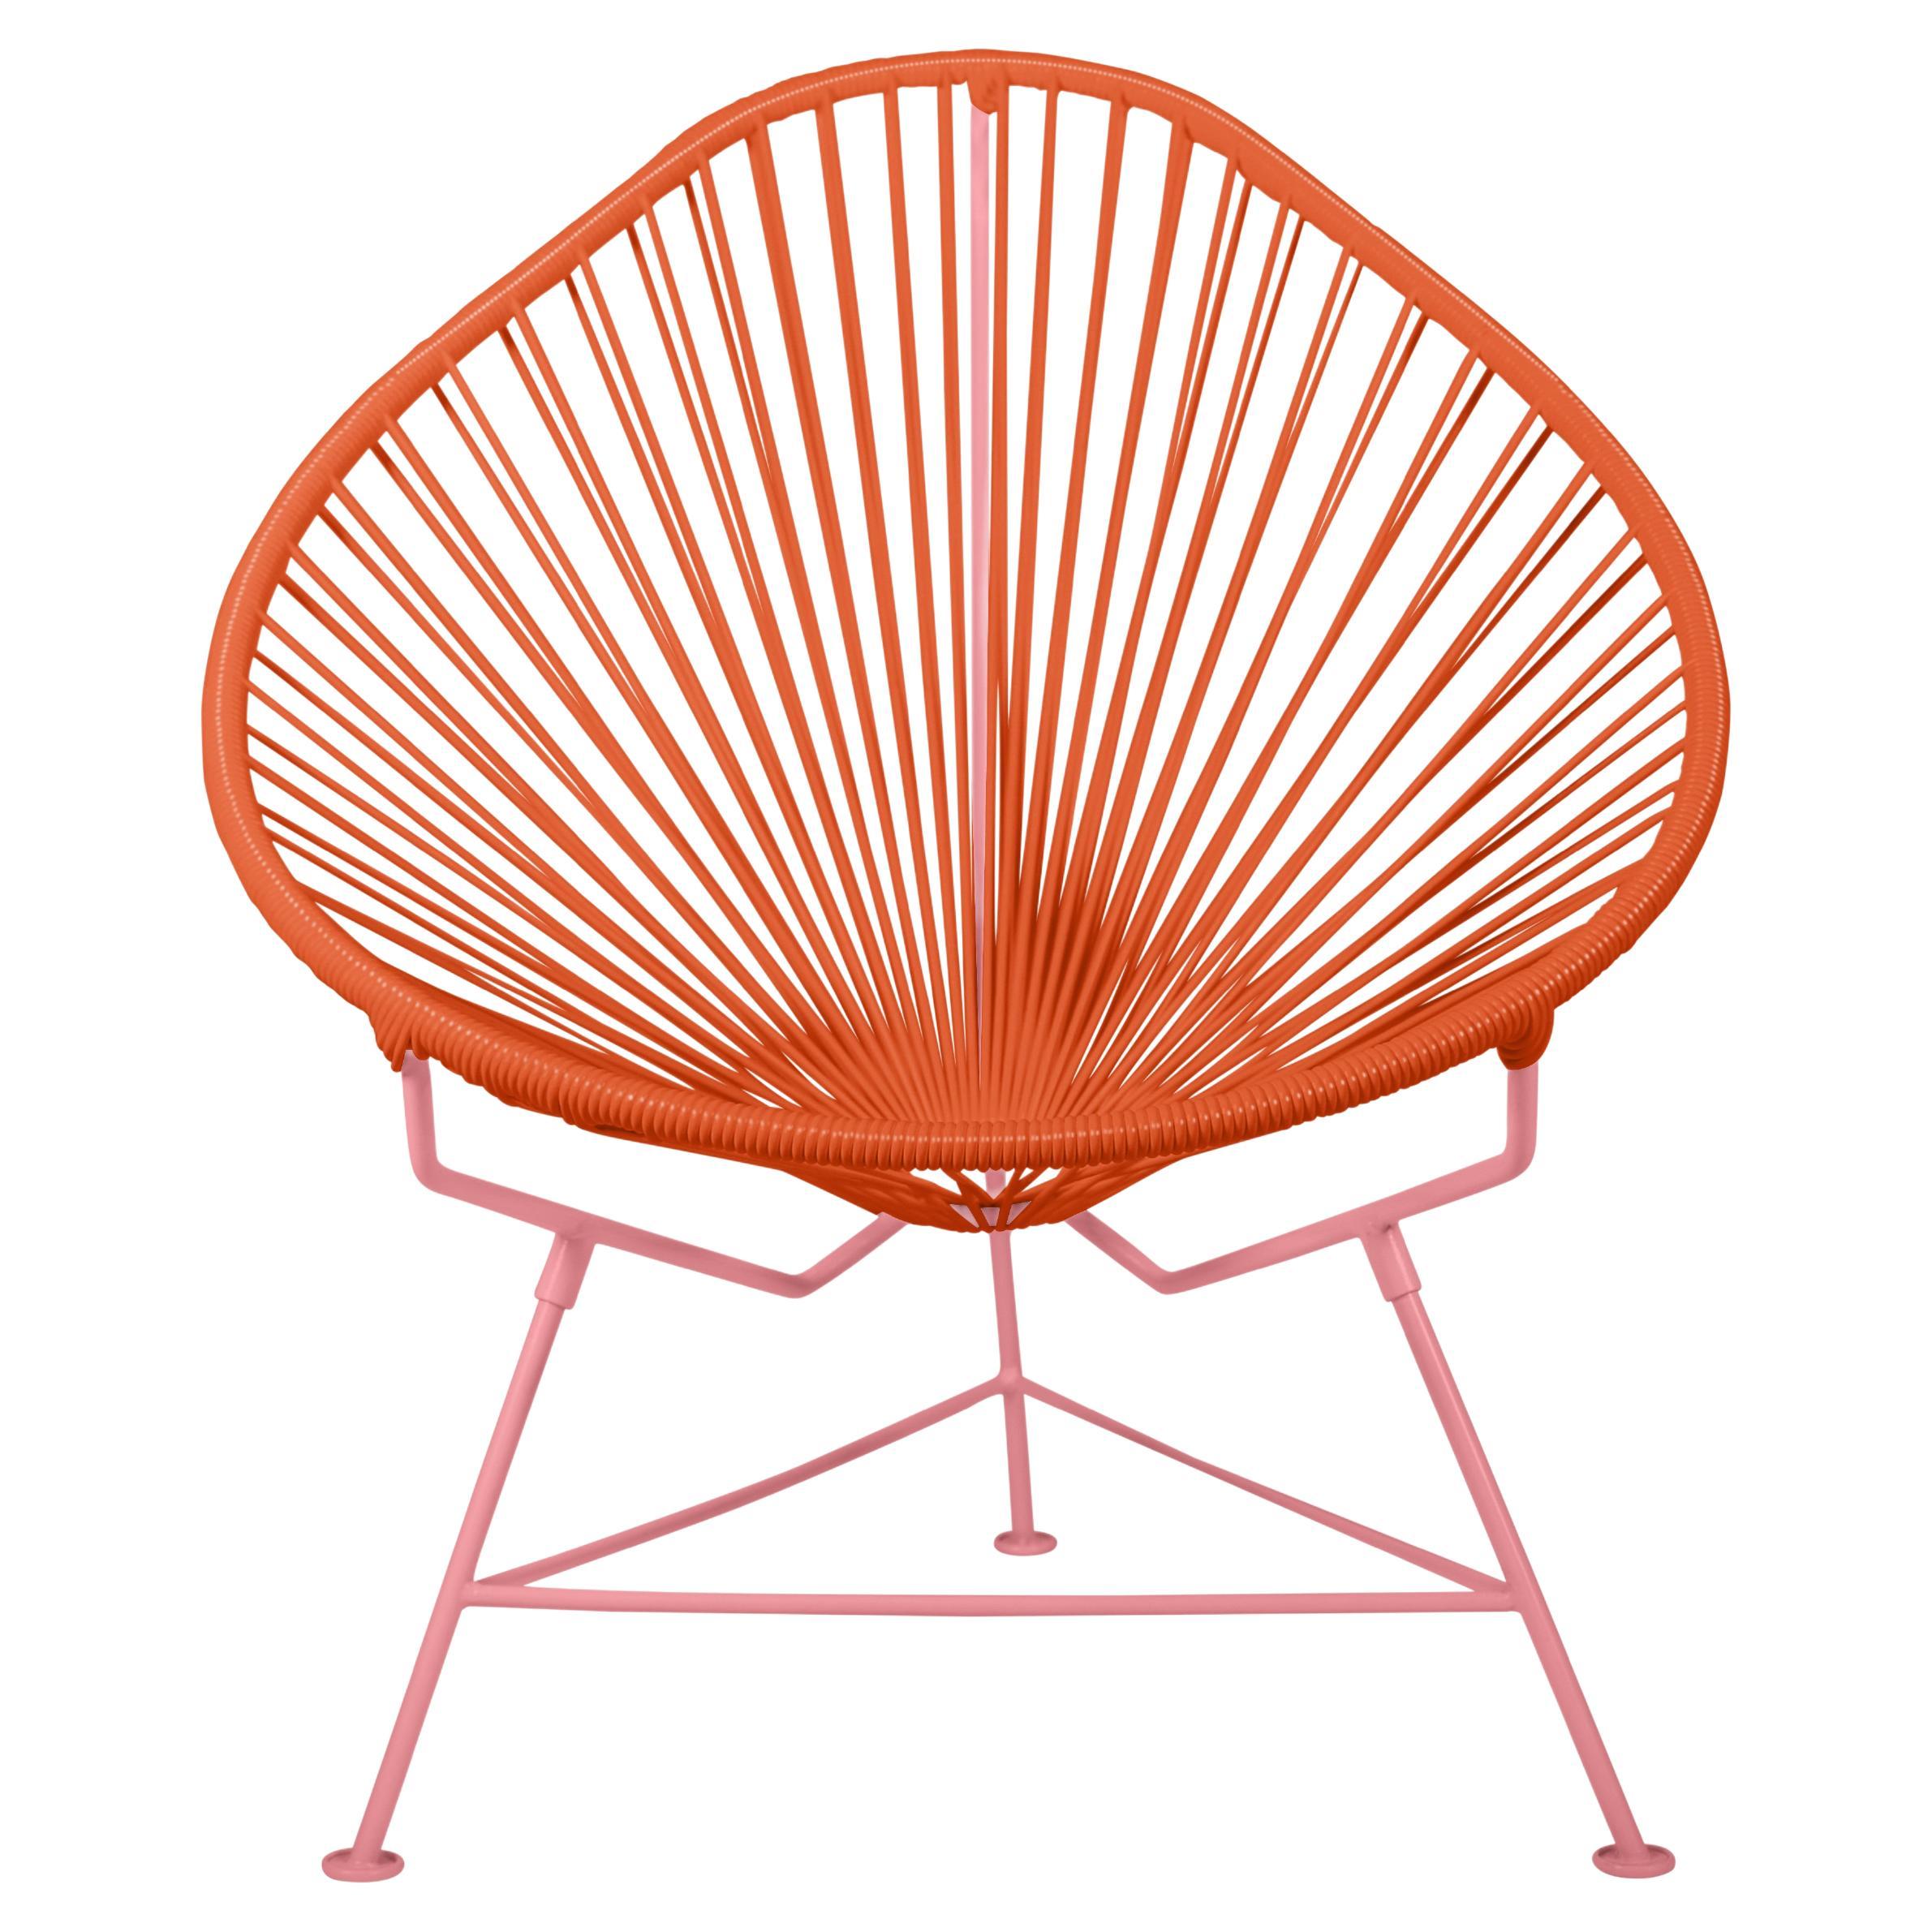 Innit Designs - Chaise Acapulco - Tissage orange sur cadre corail